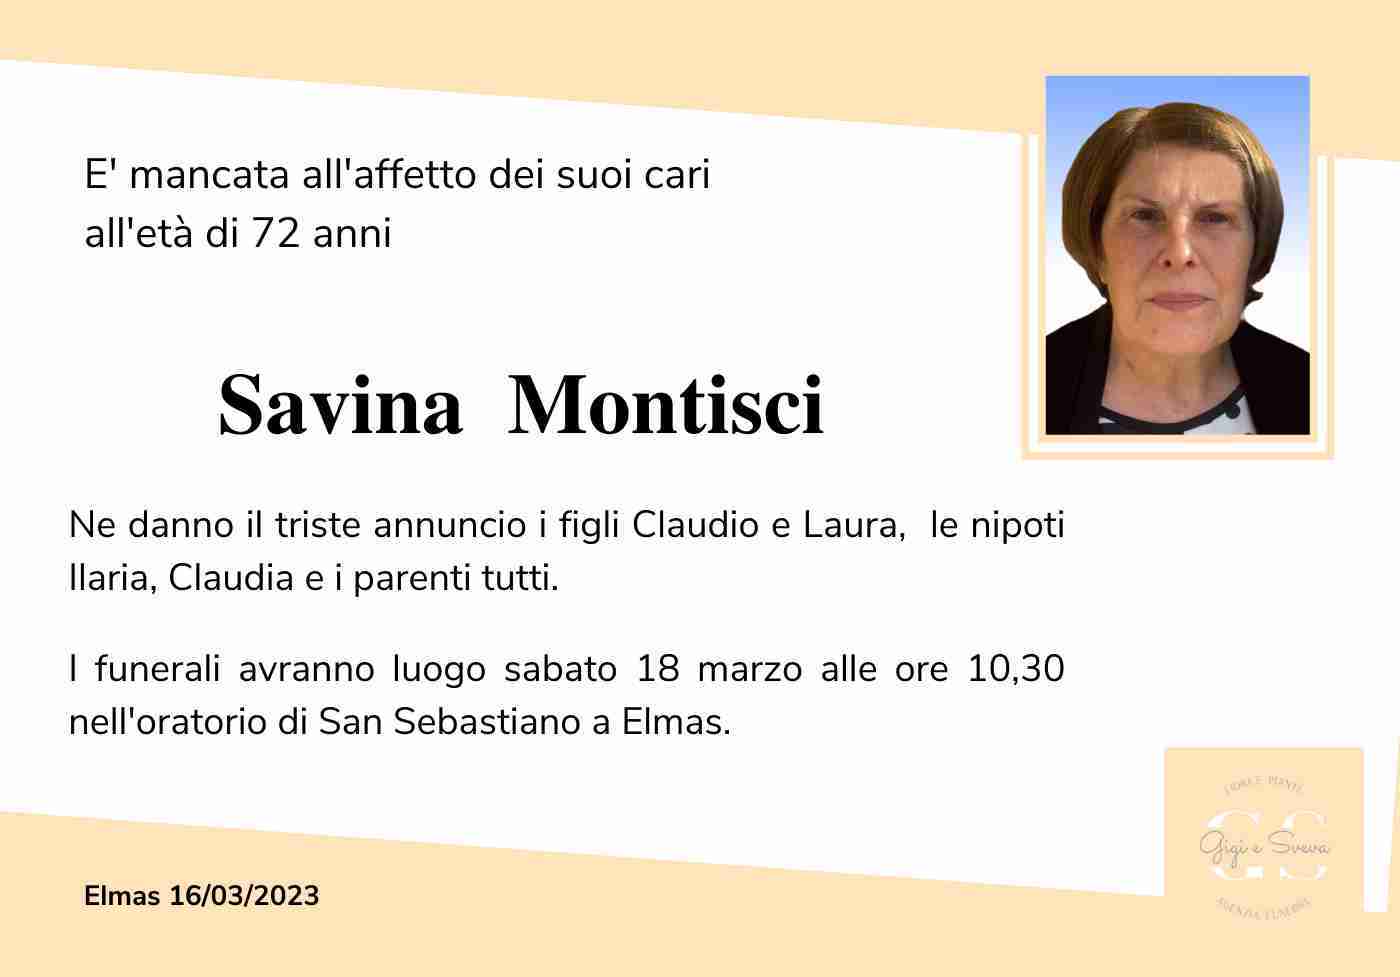 Savina Montisci